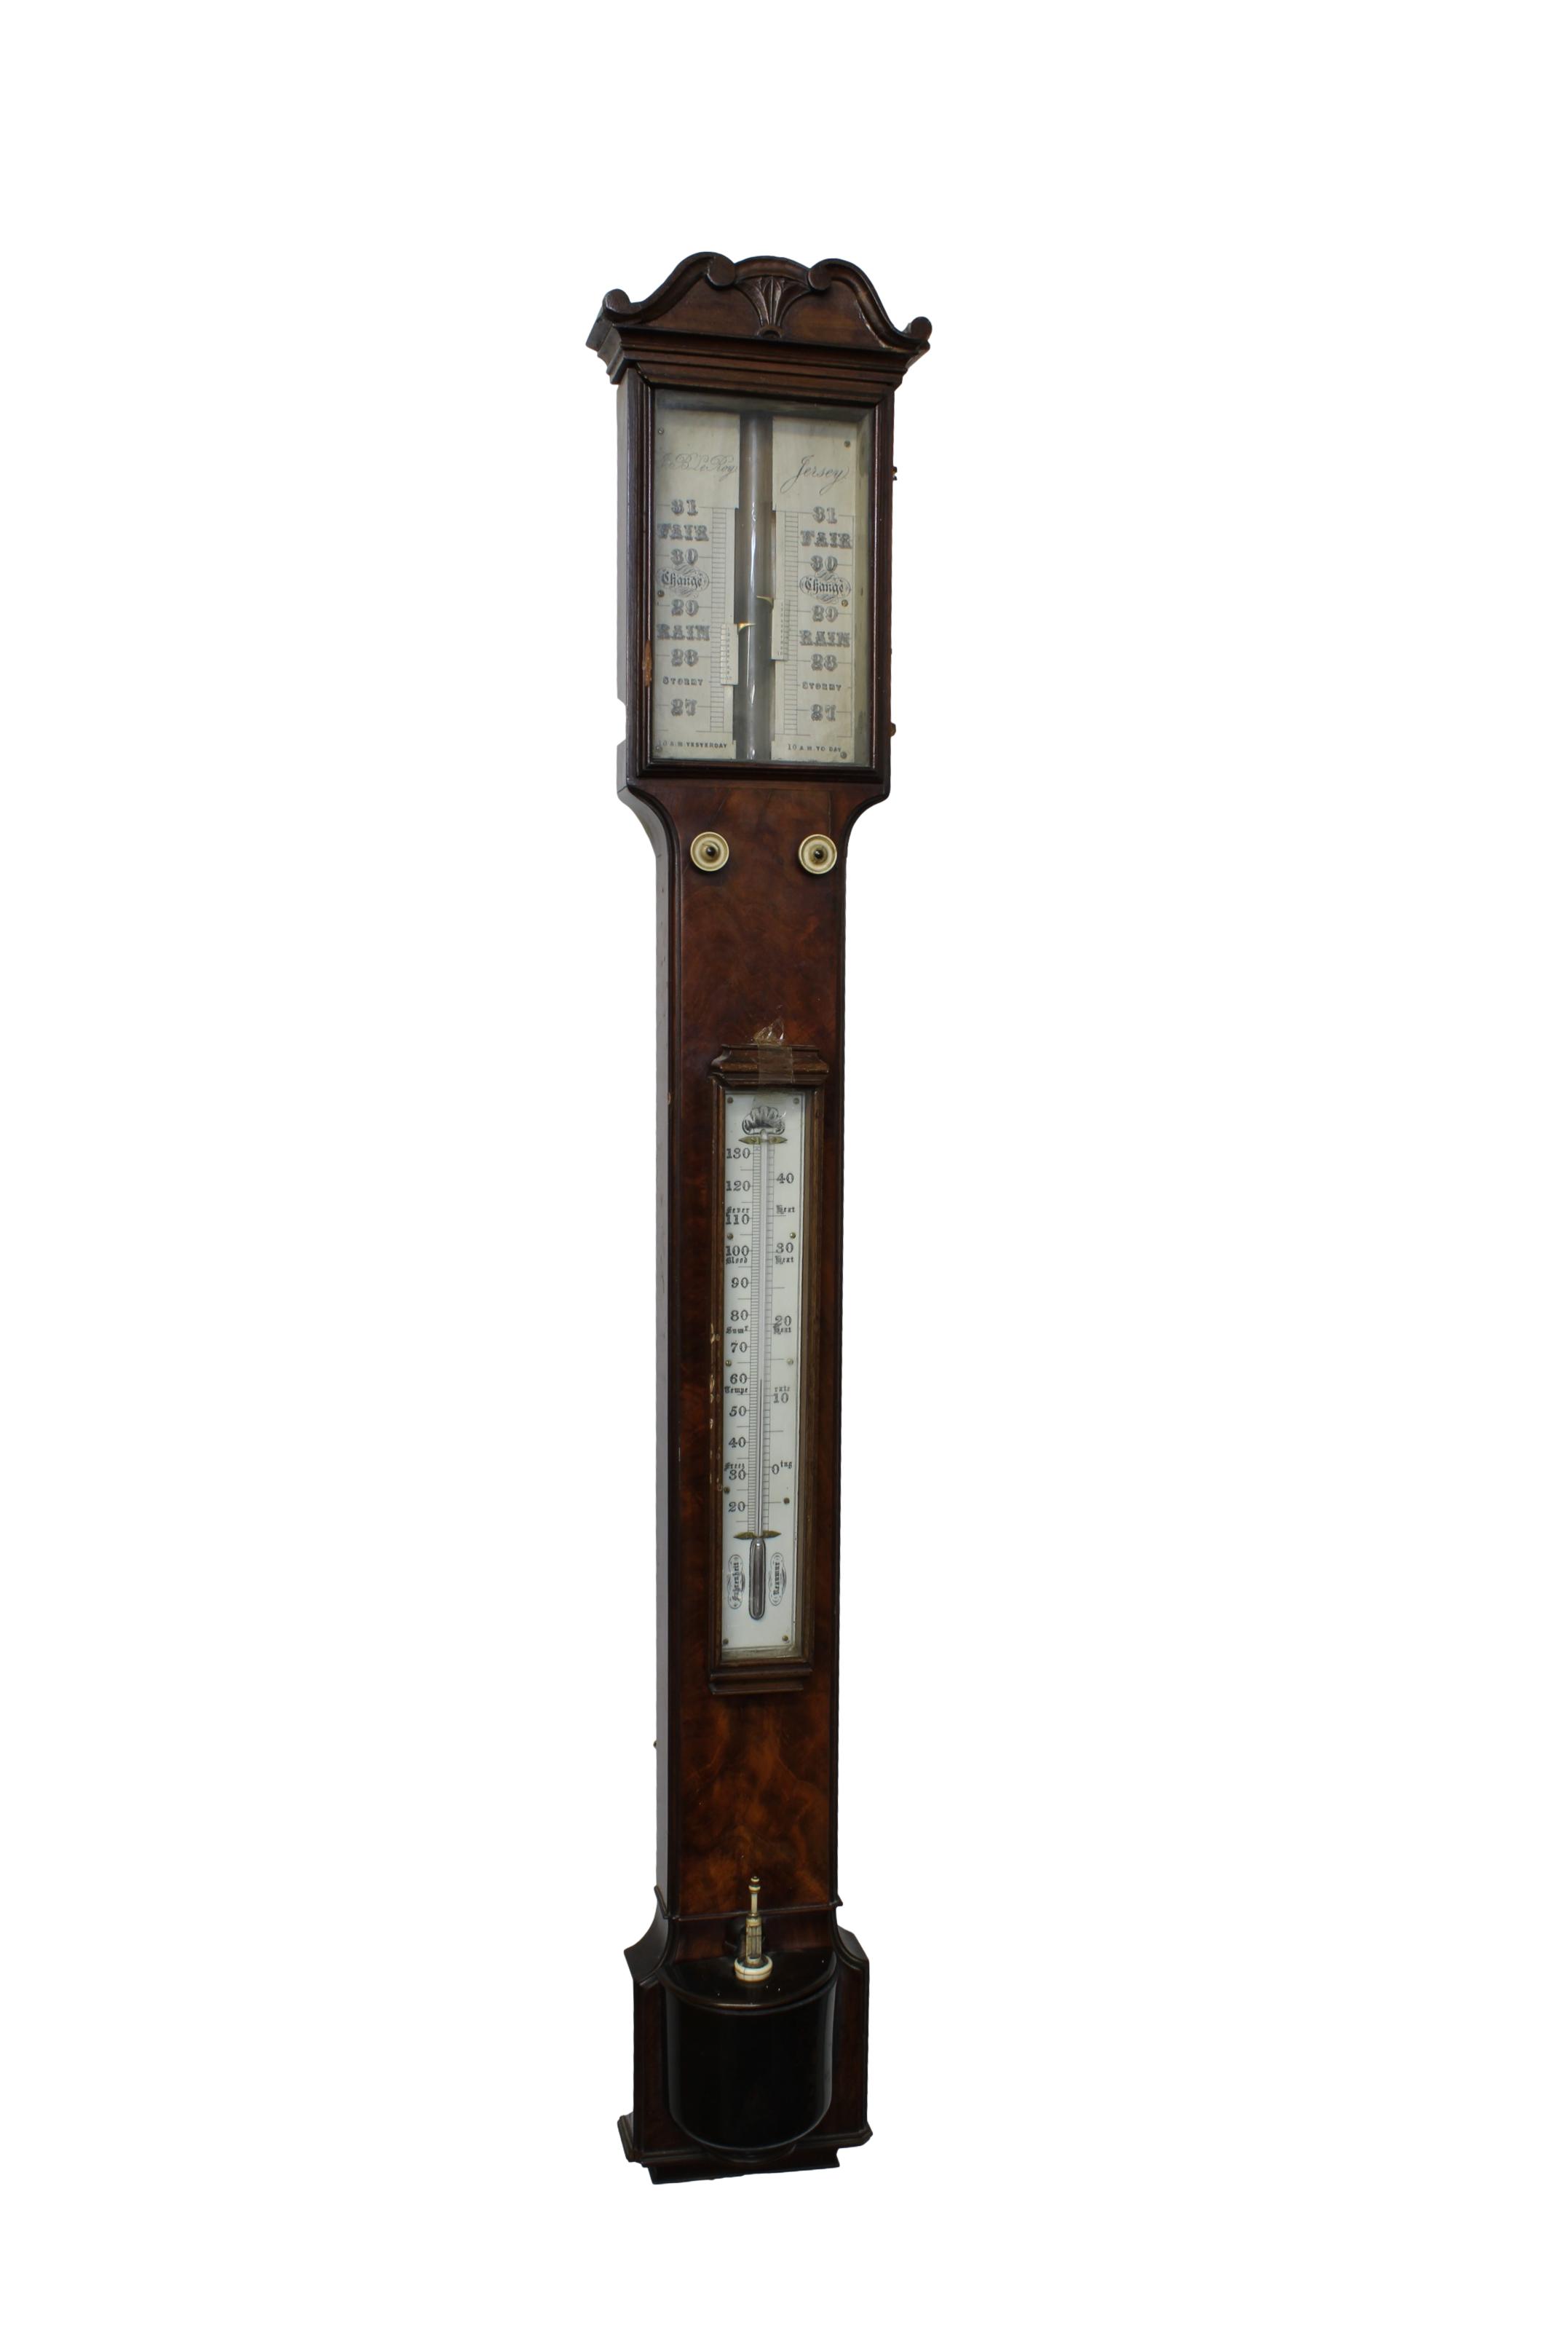 A fine, early 19th century, barometer by John Bosdet Le Roy, Jersey